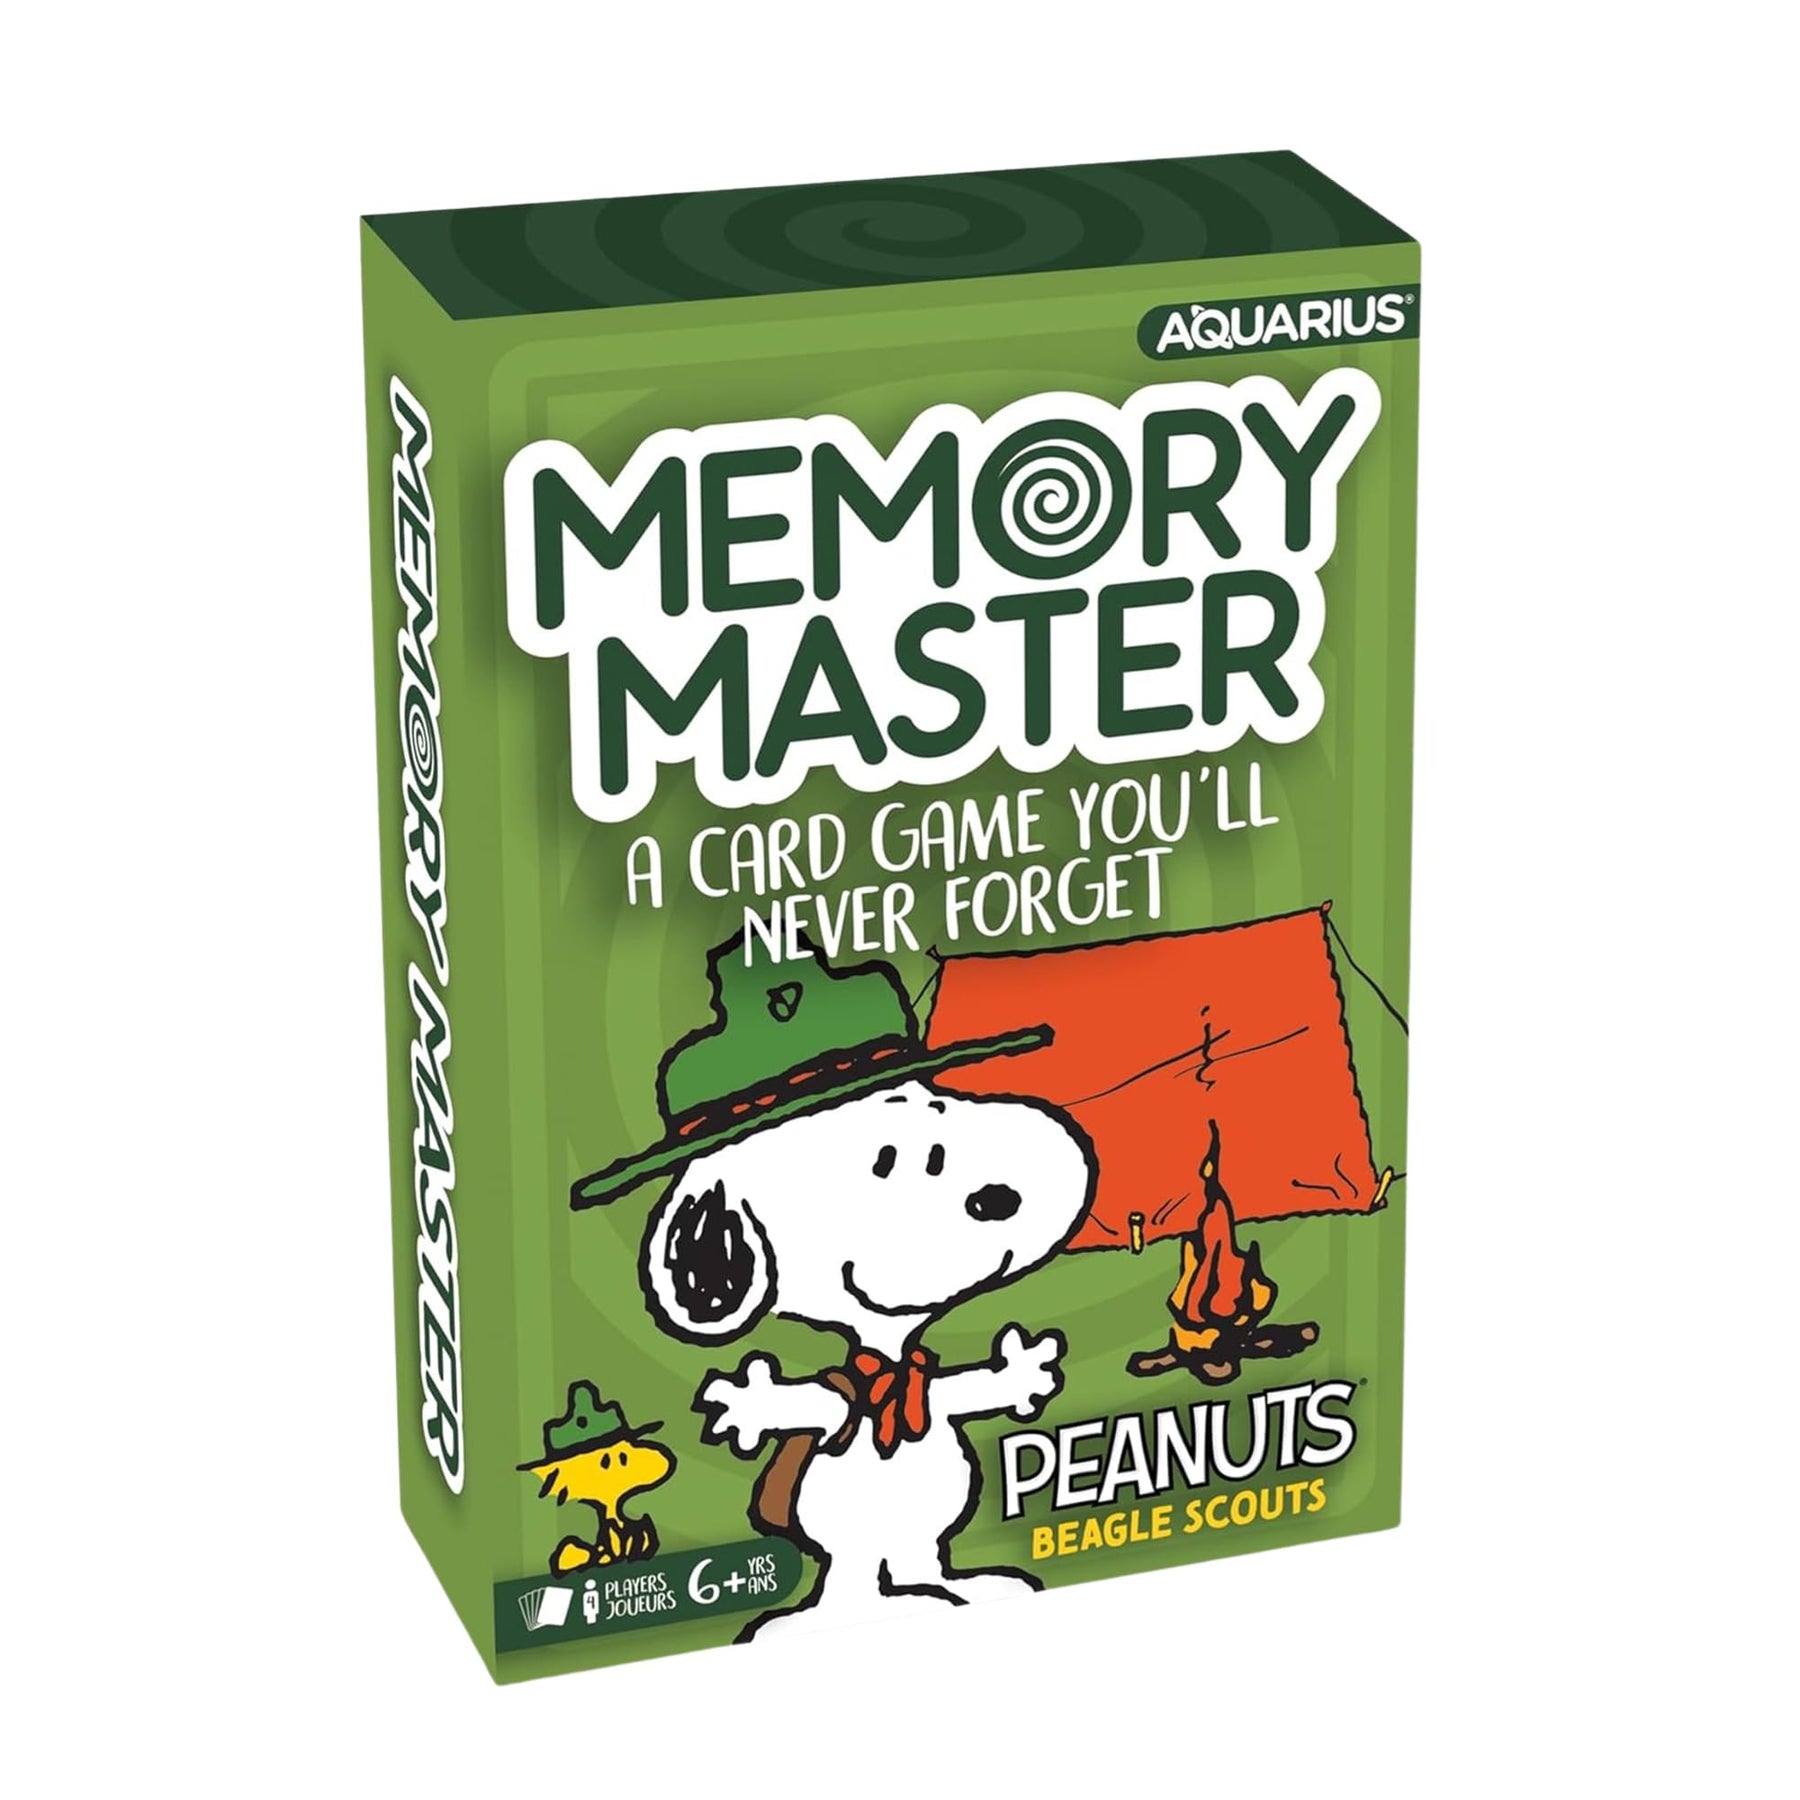 Peanuts Beagle Scouts Memory Master Card Game